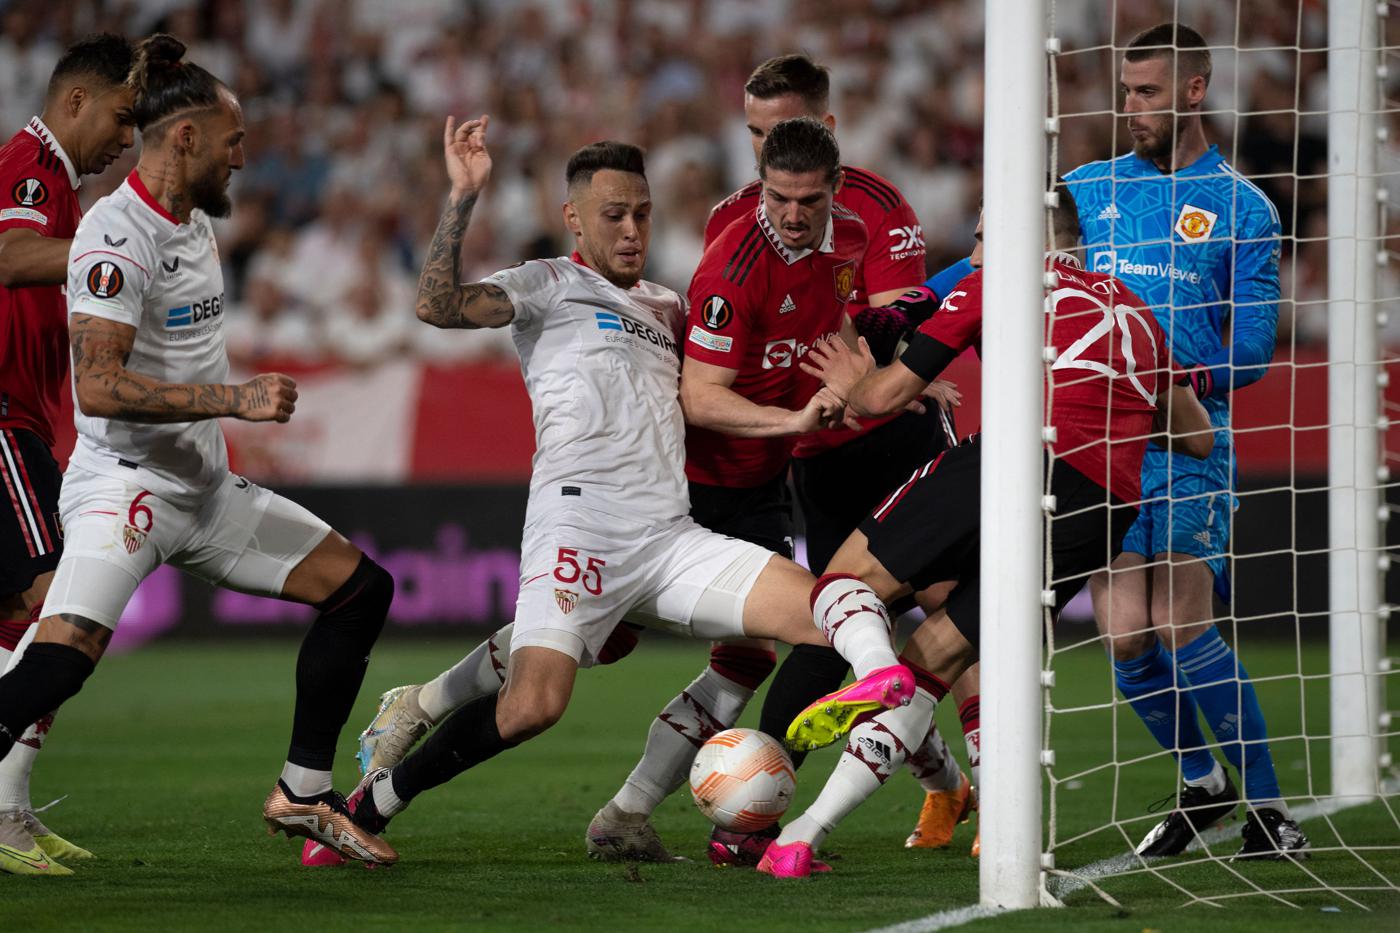 Sevilla v Man United - 3-0. Europa League. Match review, statistics.